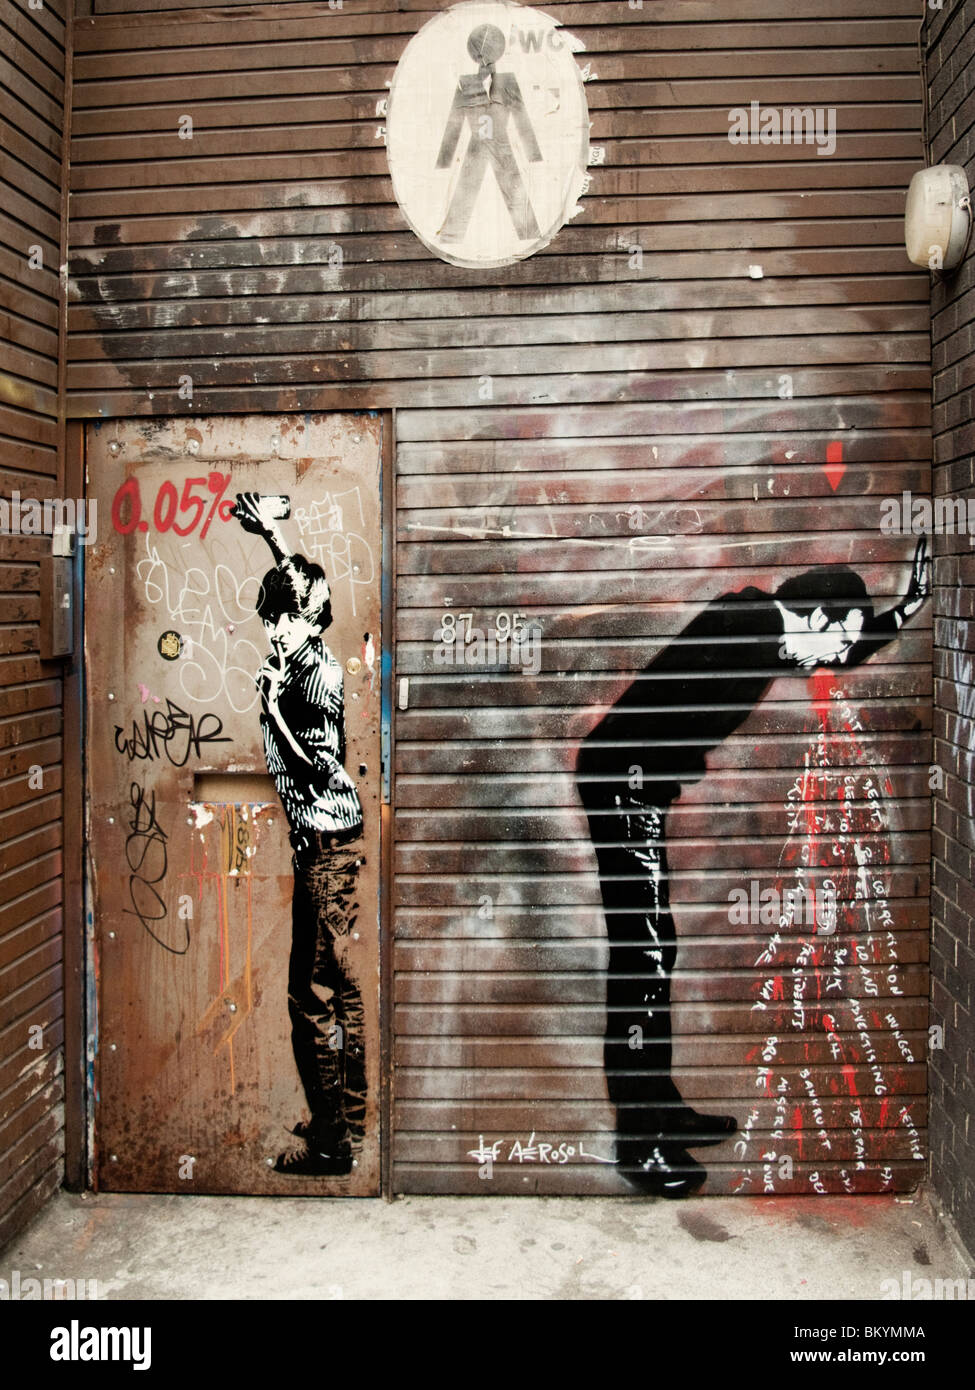 Graffiti von Jef Aerosol, Hoxton, London Stockfoto